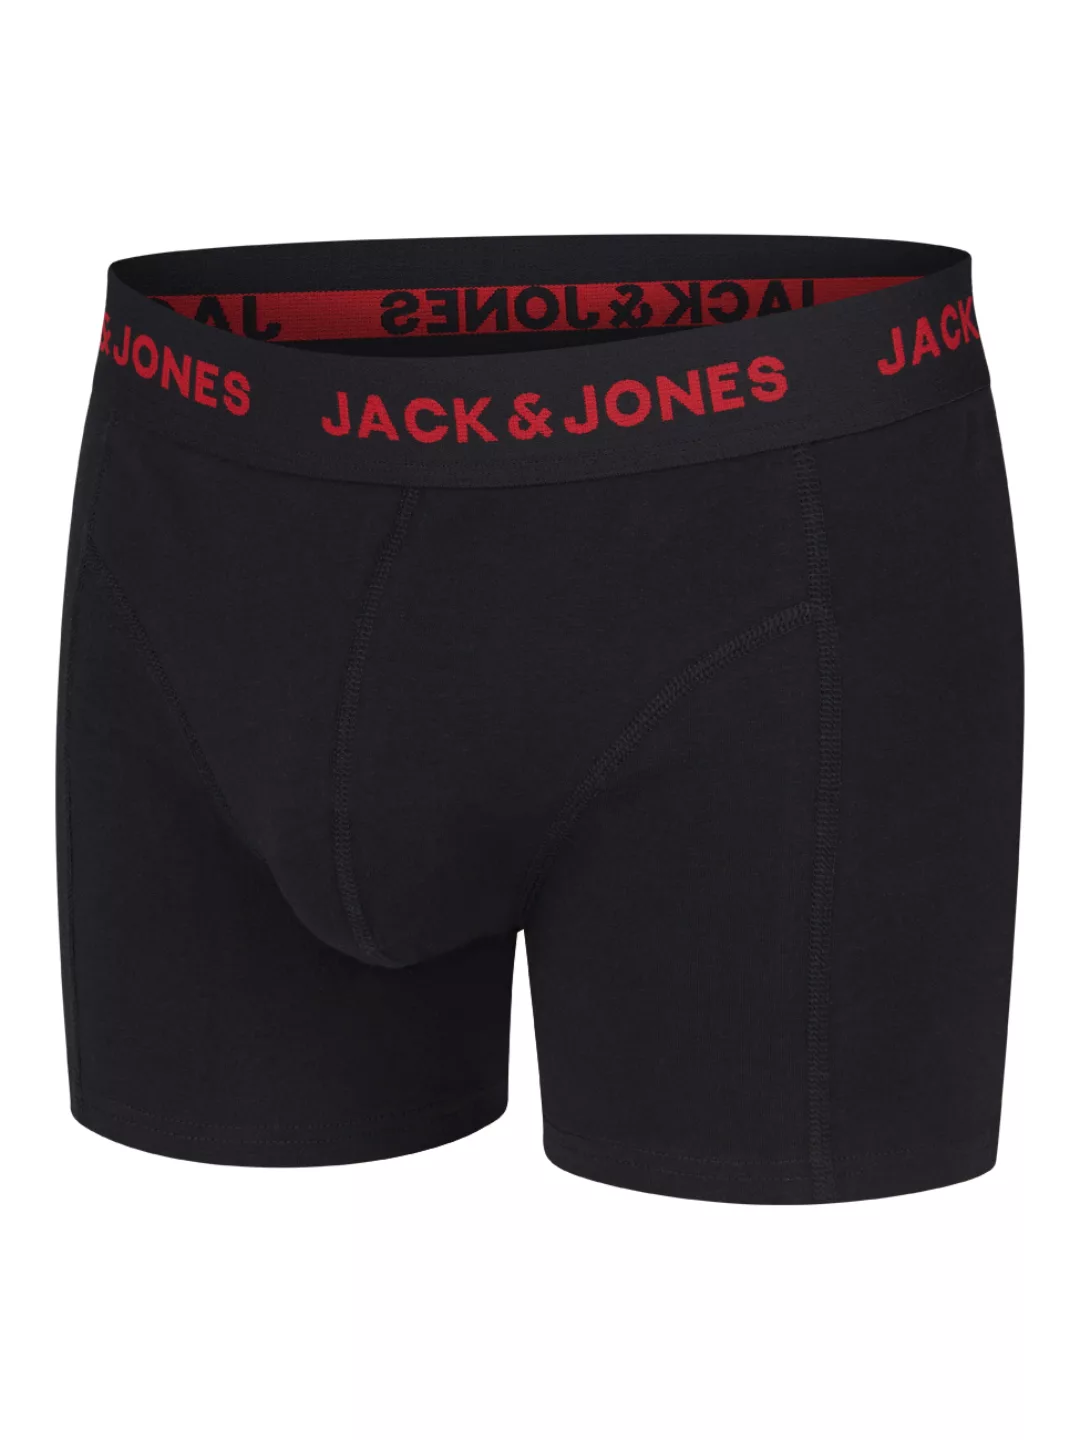 Jack & Jones Boxershorts Herren 6er Pack günstig online kaufen